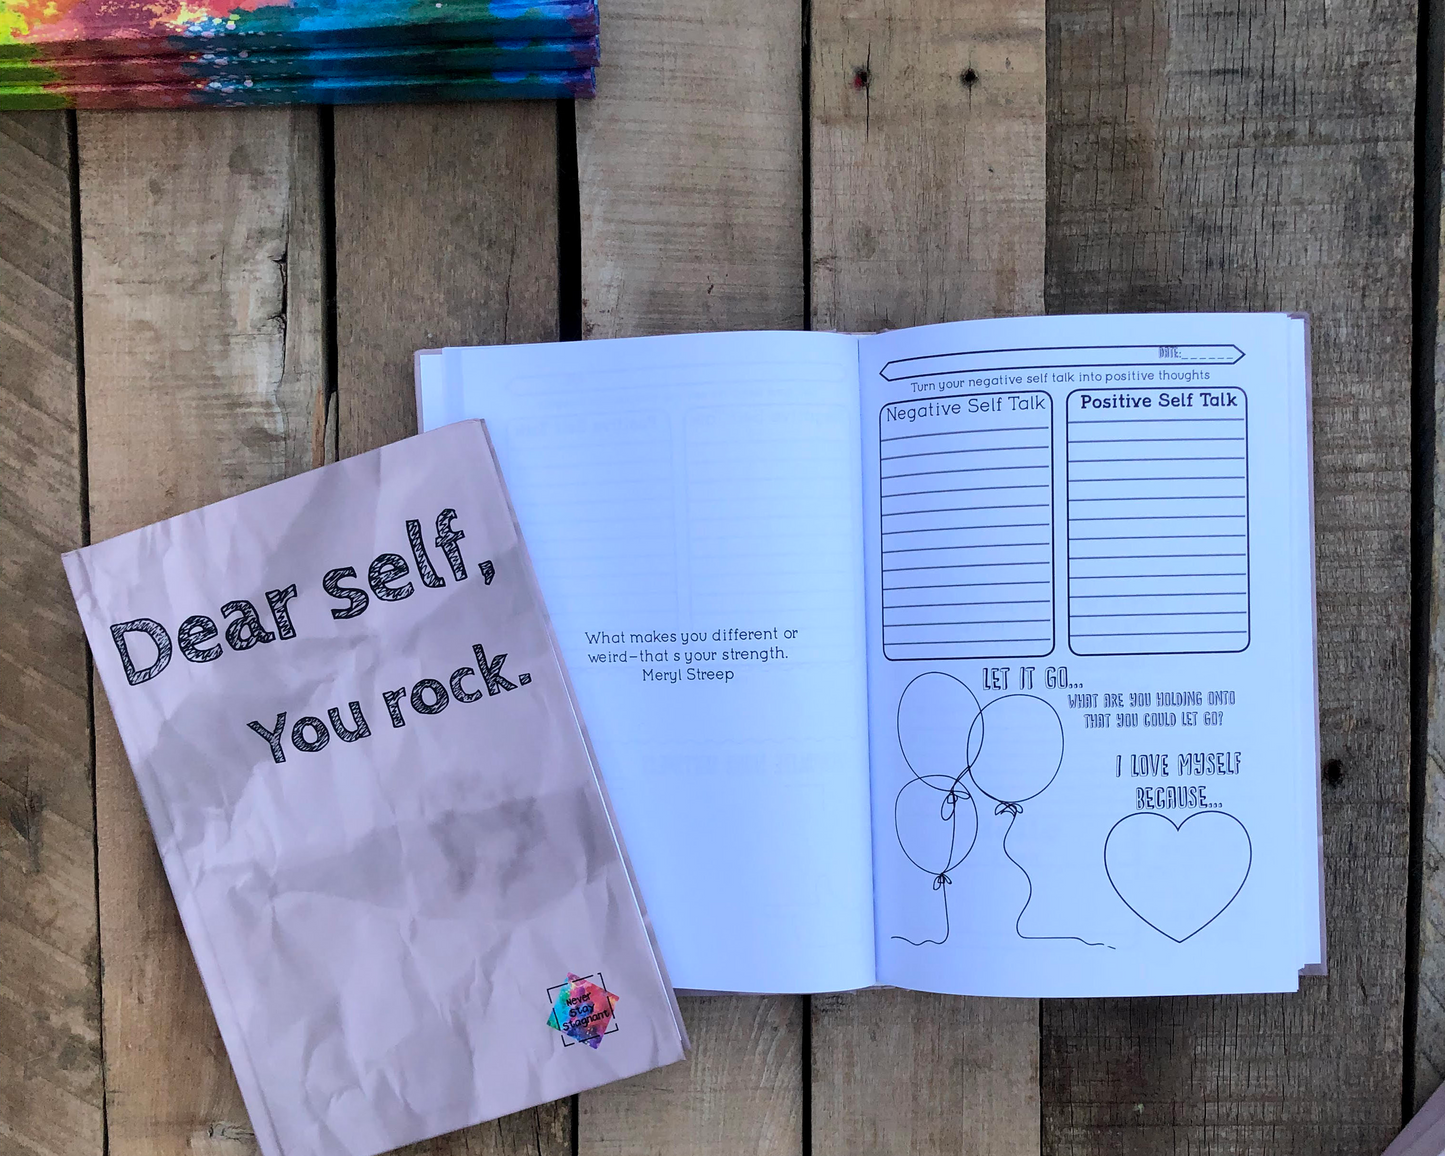 Dear Self, You Rock: An Interactive Positive Self-Talk Journal